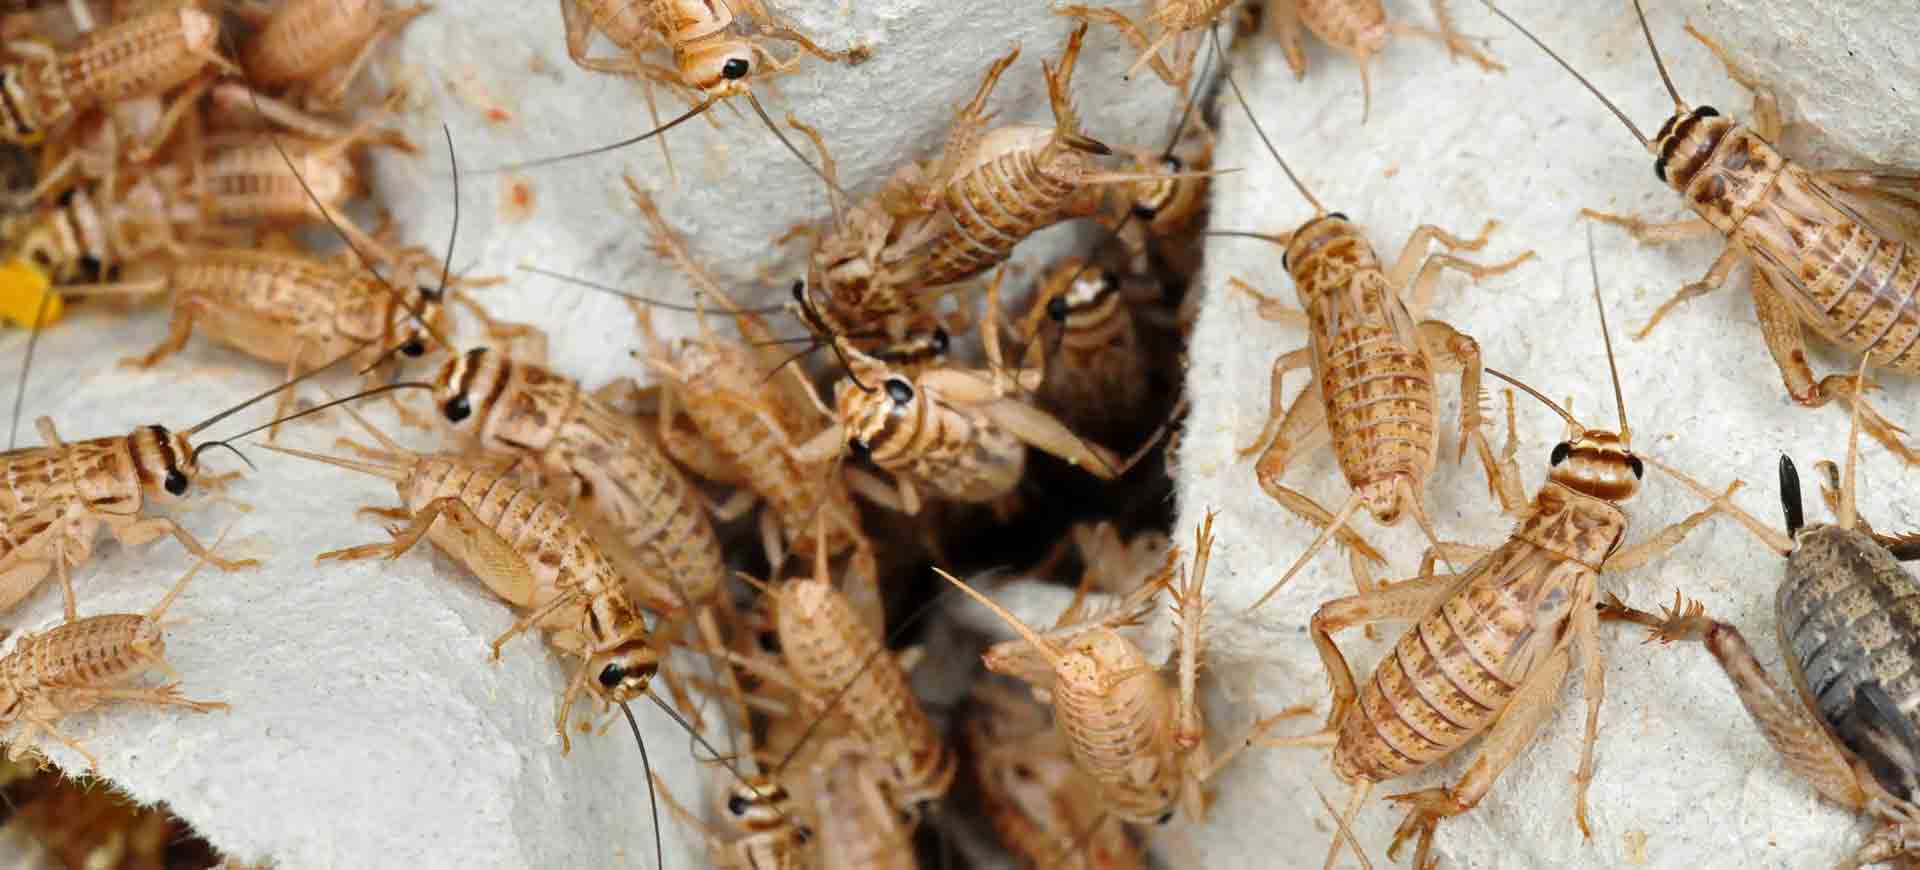 cricket pest control mount helix